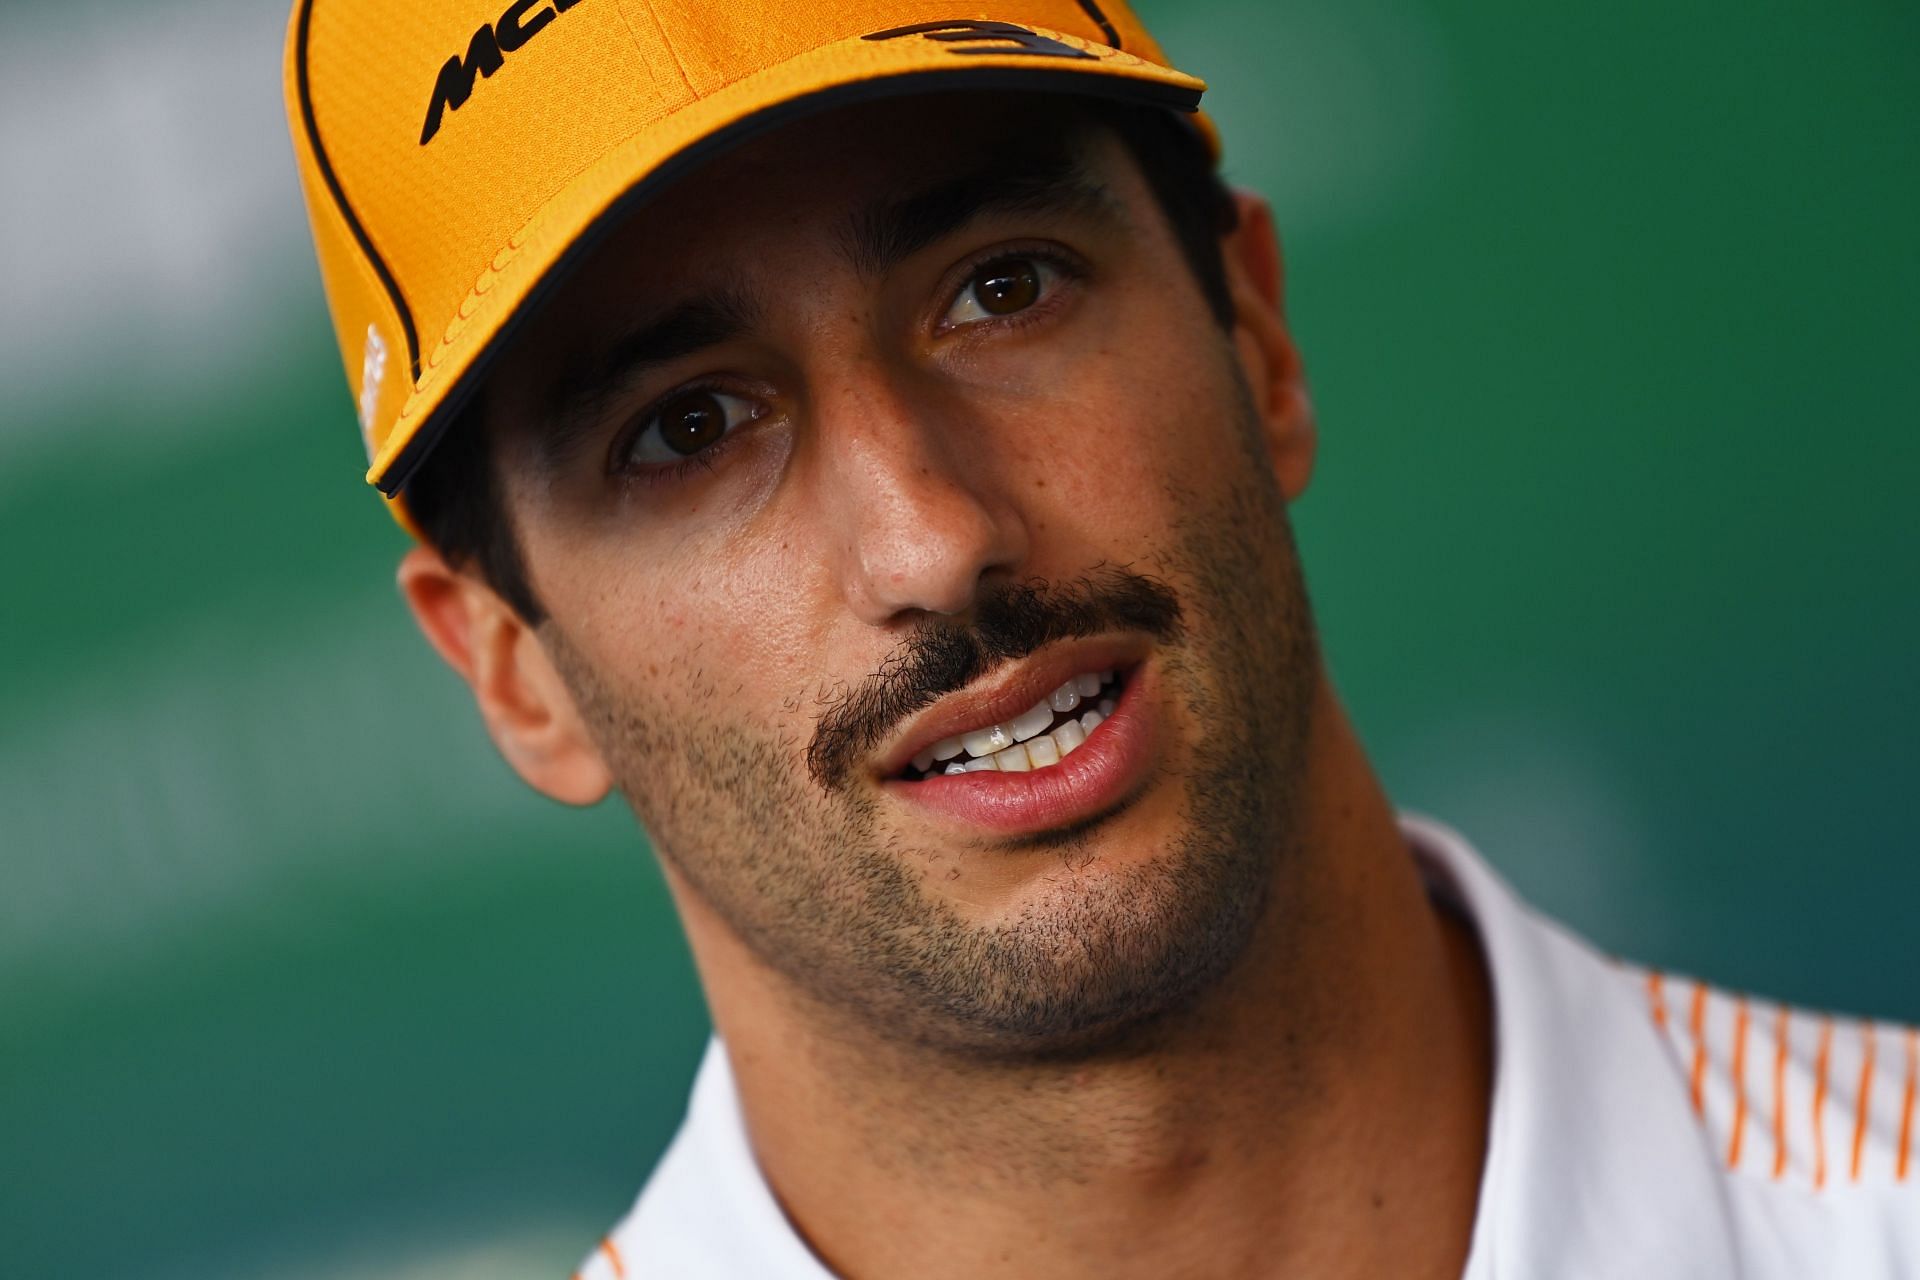 Daniel Ricciardo looks on in the paddock during 2021 Qatar Grand Prix.